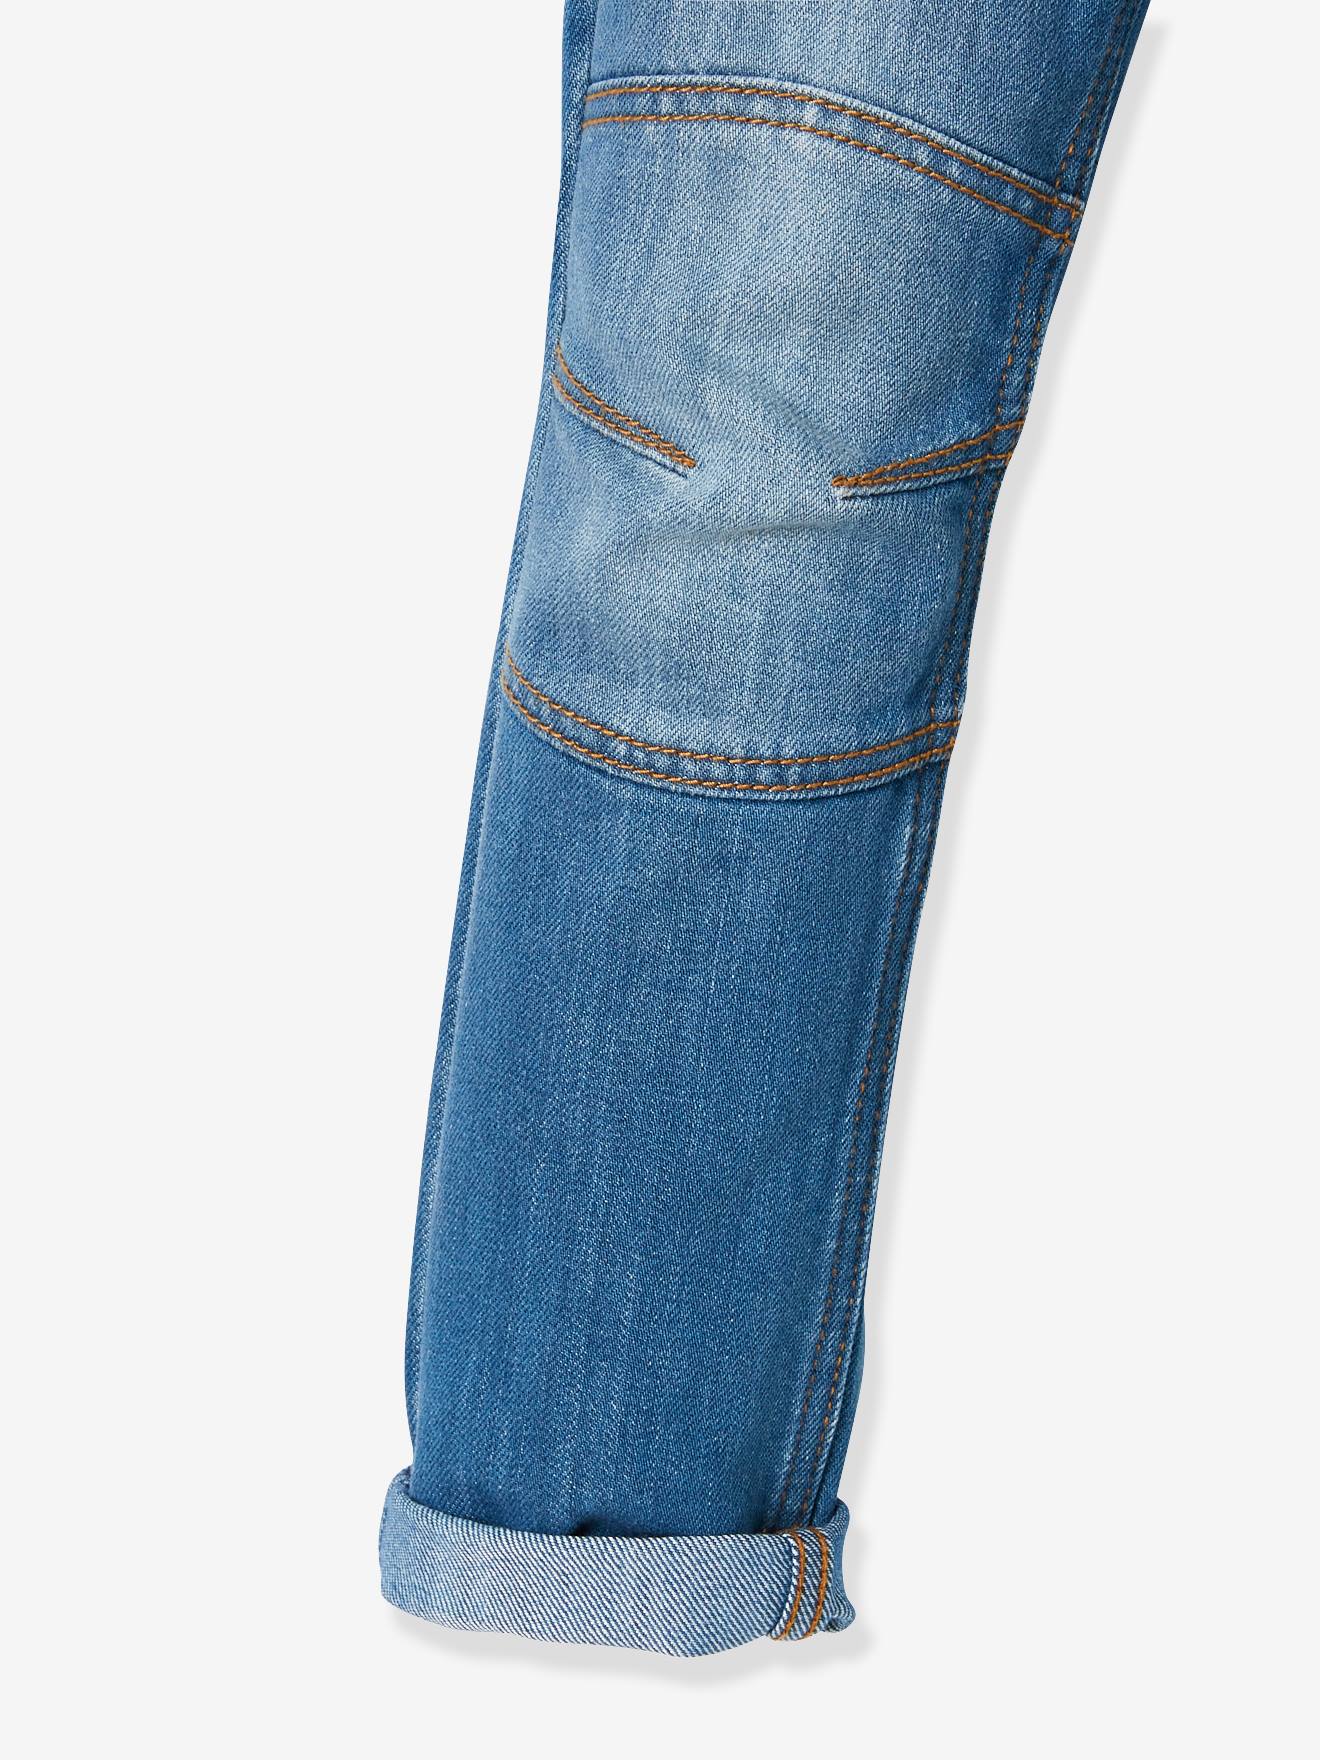 narrow jeans for boys